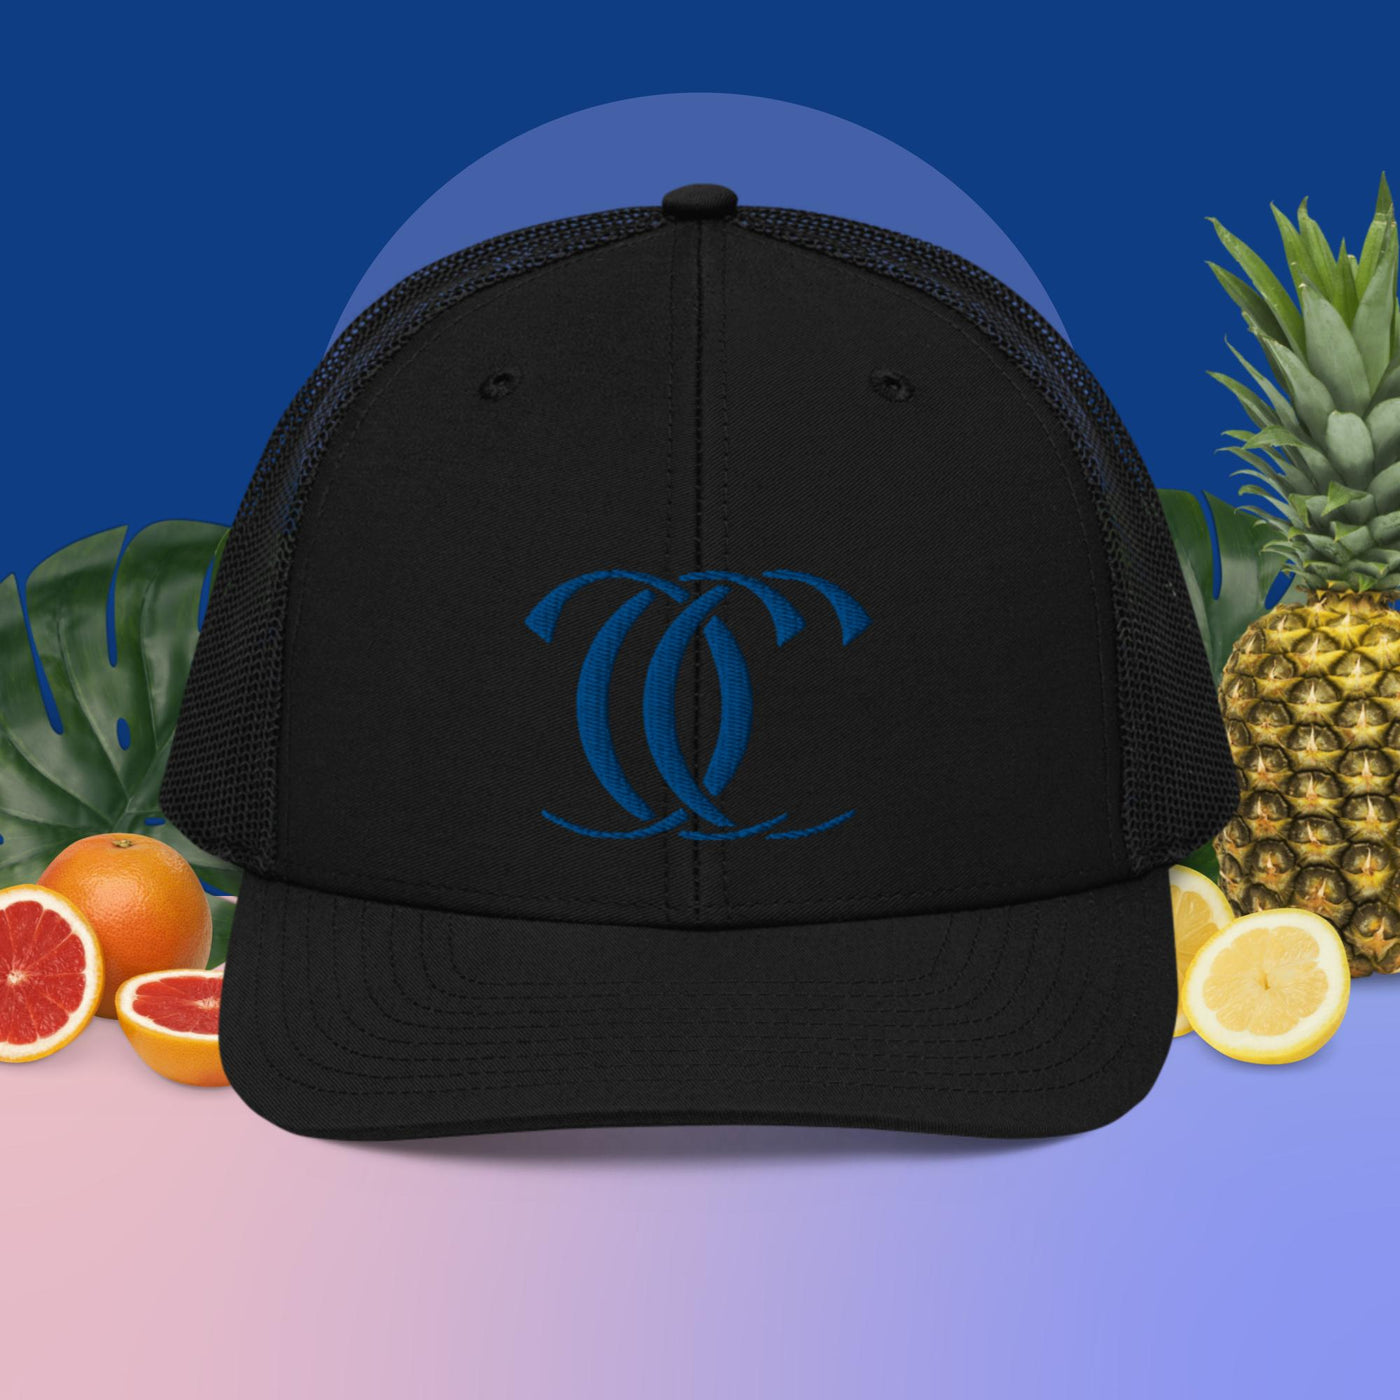 Top Headwear Structured Baseball Hat Cap, Royal Blue India